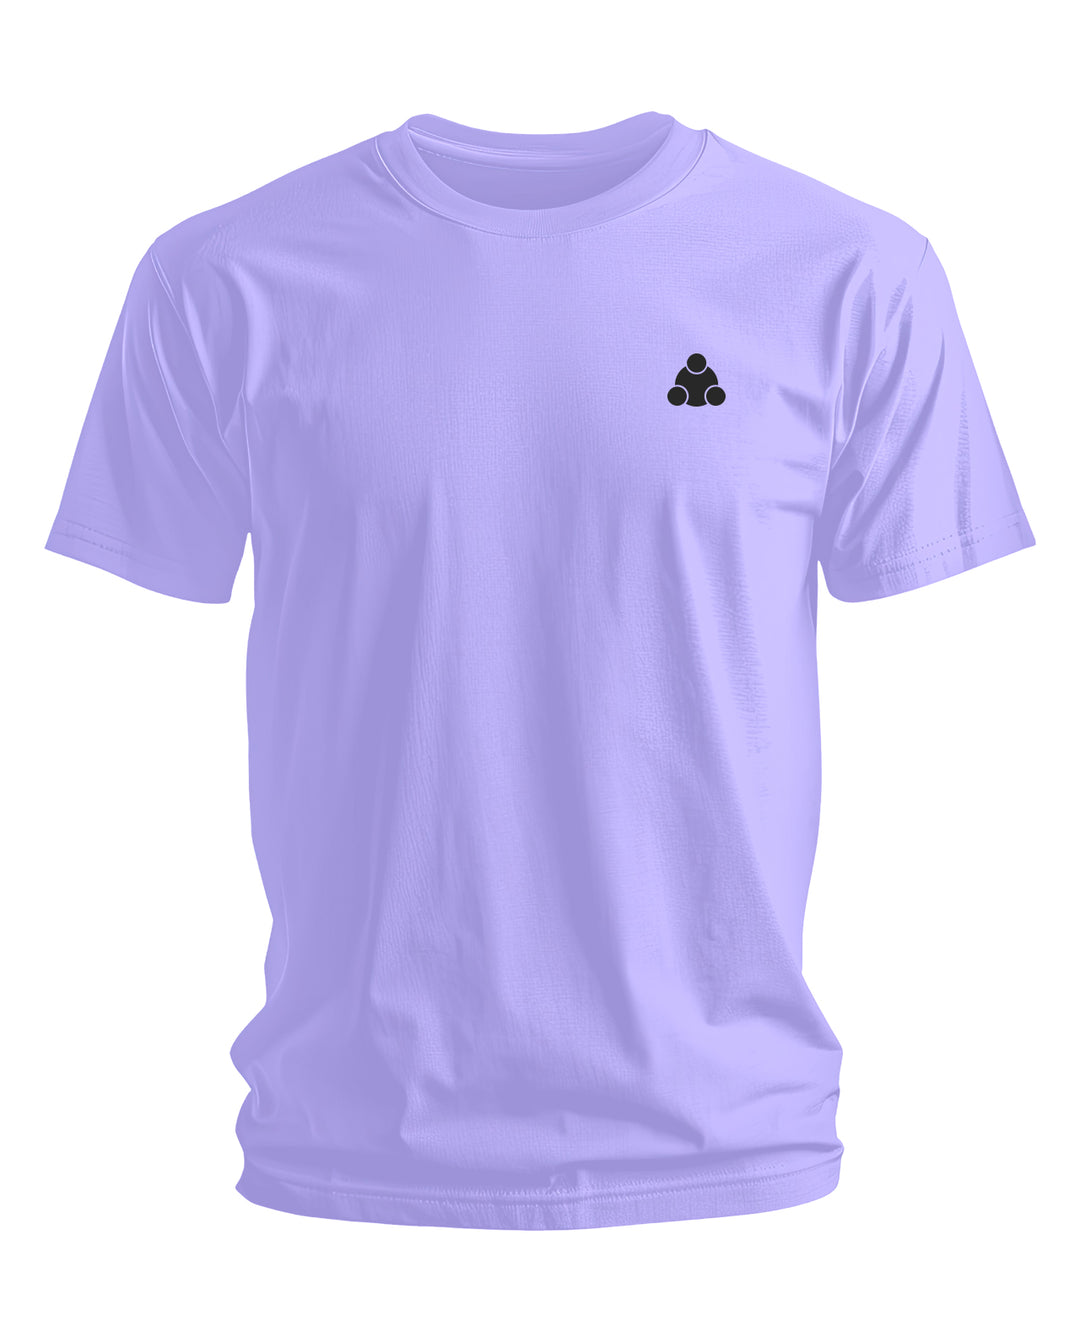 Trinizen Original Supima Cotton T-shirt - Lavender